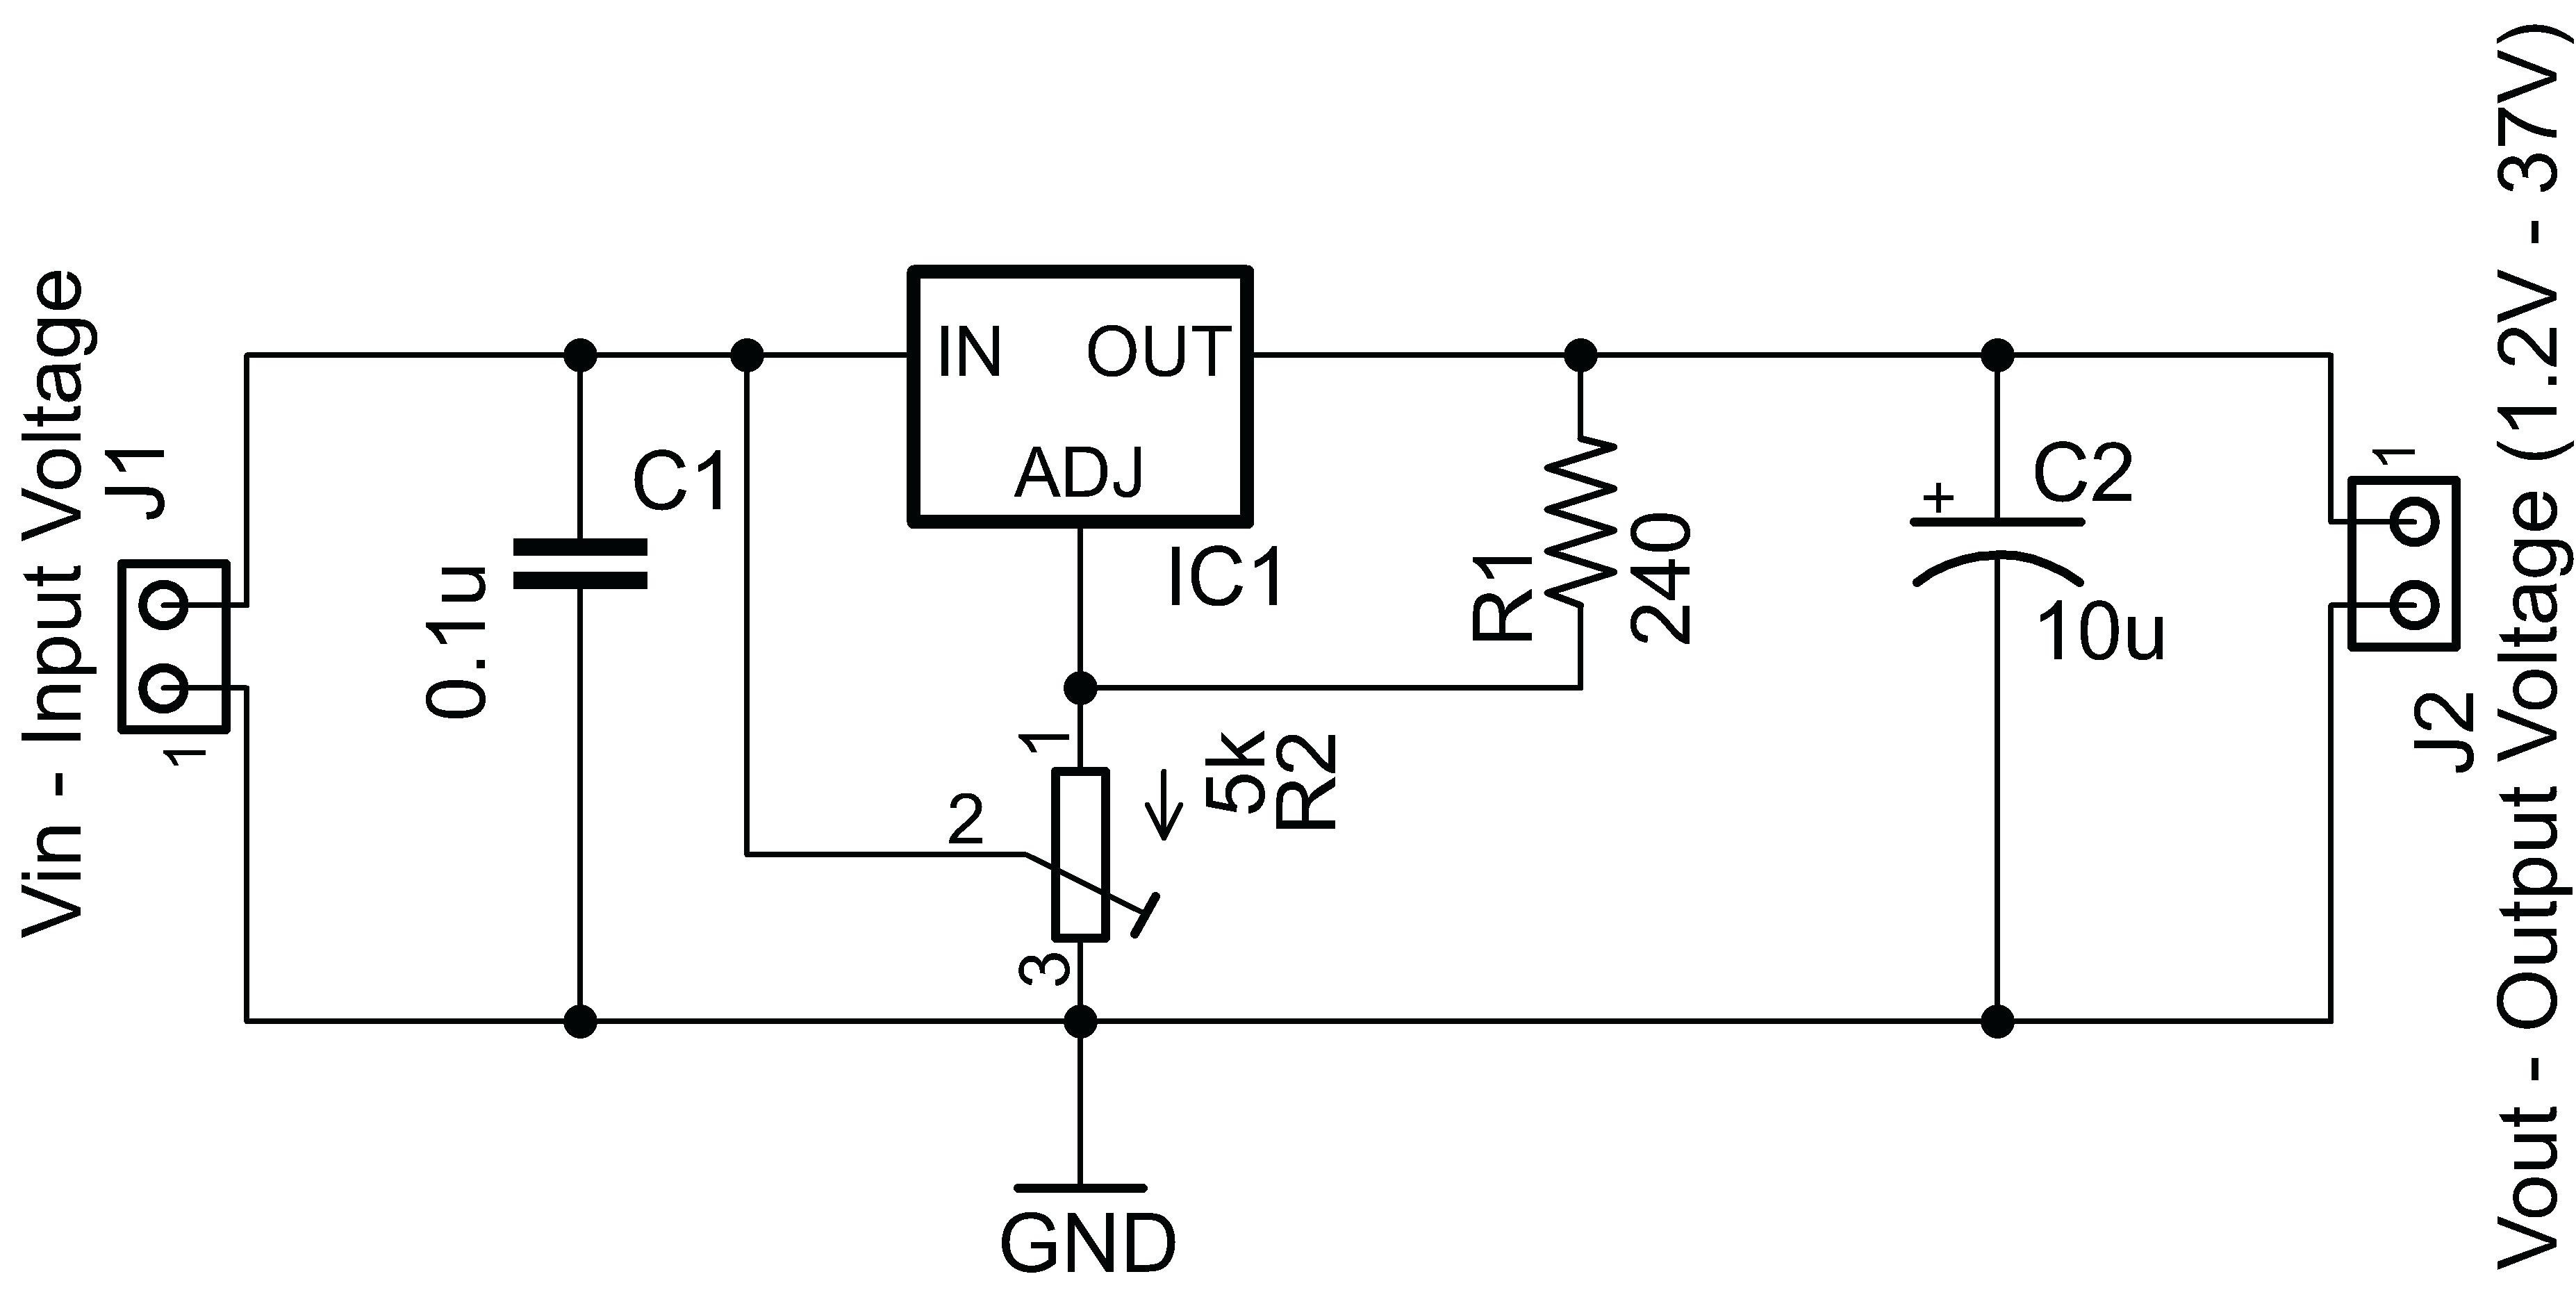 Ford External Voltage Regulator Wiring - All Wiring Diagram - Ford Alternator Wiring Diagram Internal Regulator